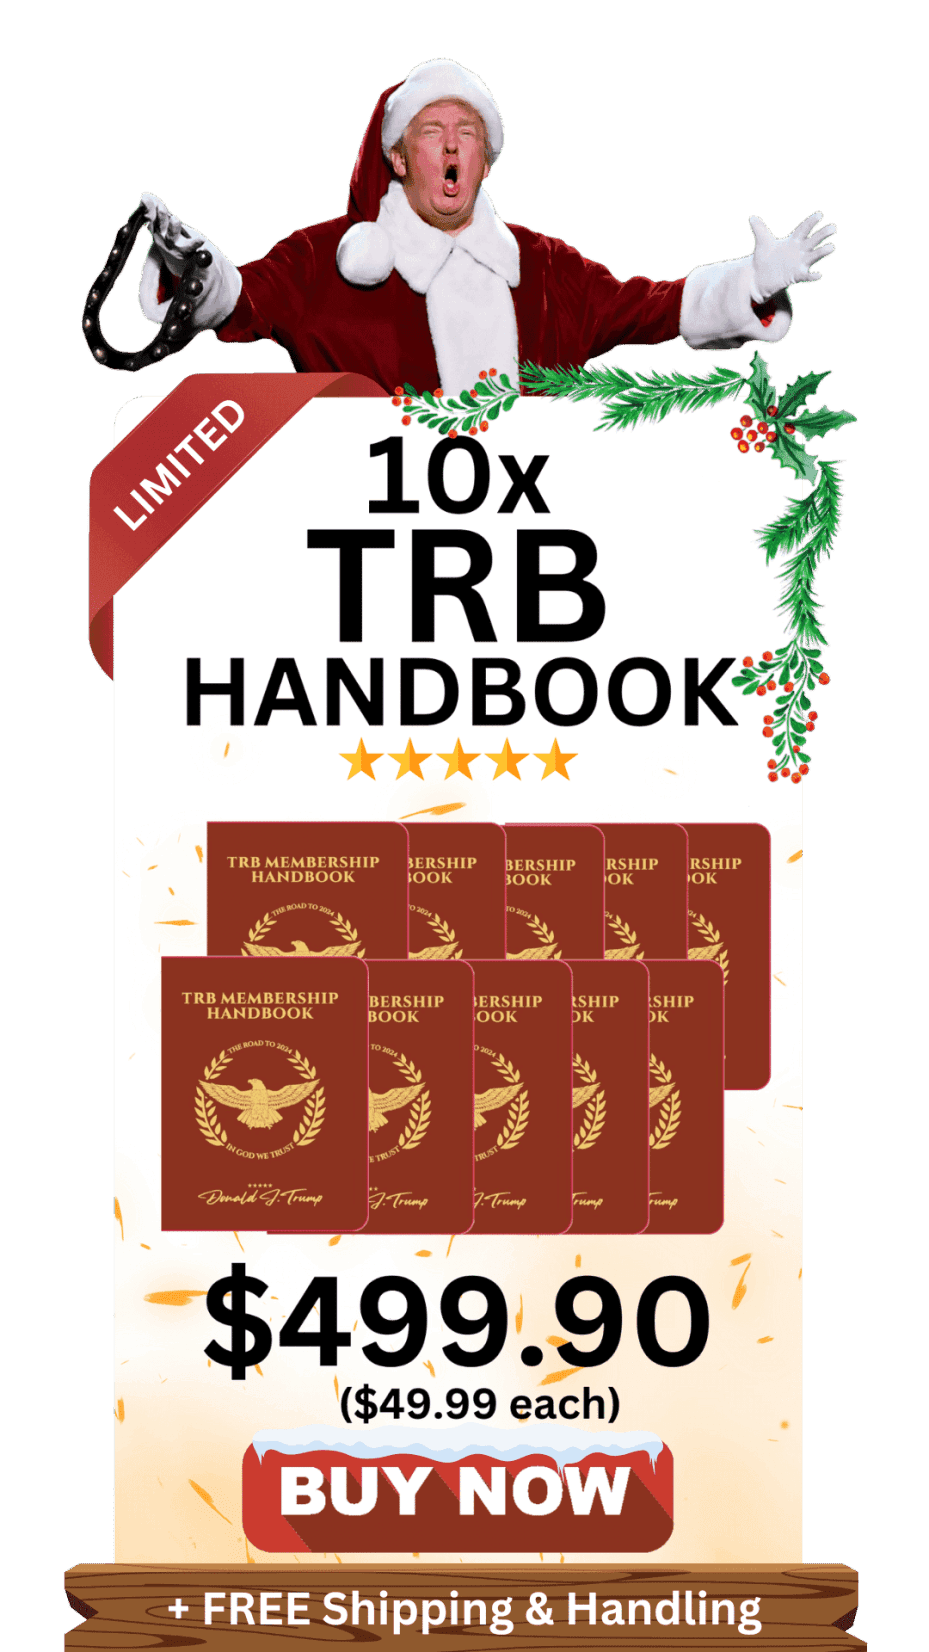 TRB Membership Handbook buy 10x